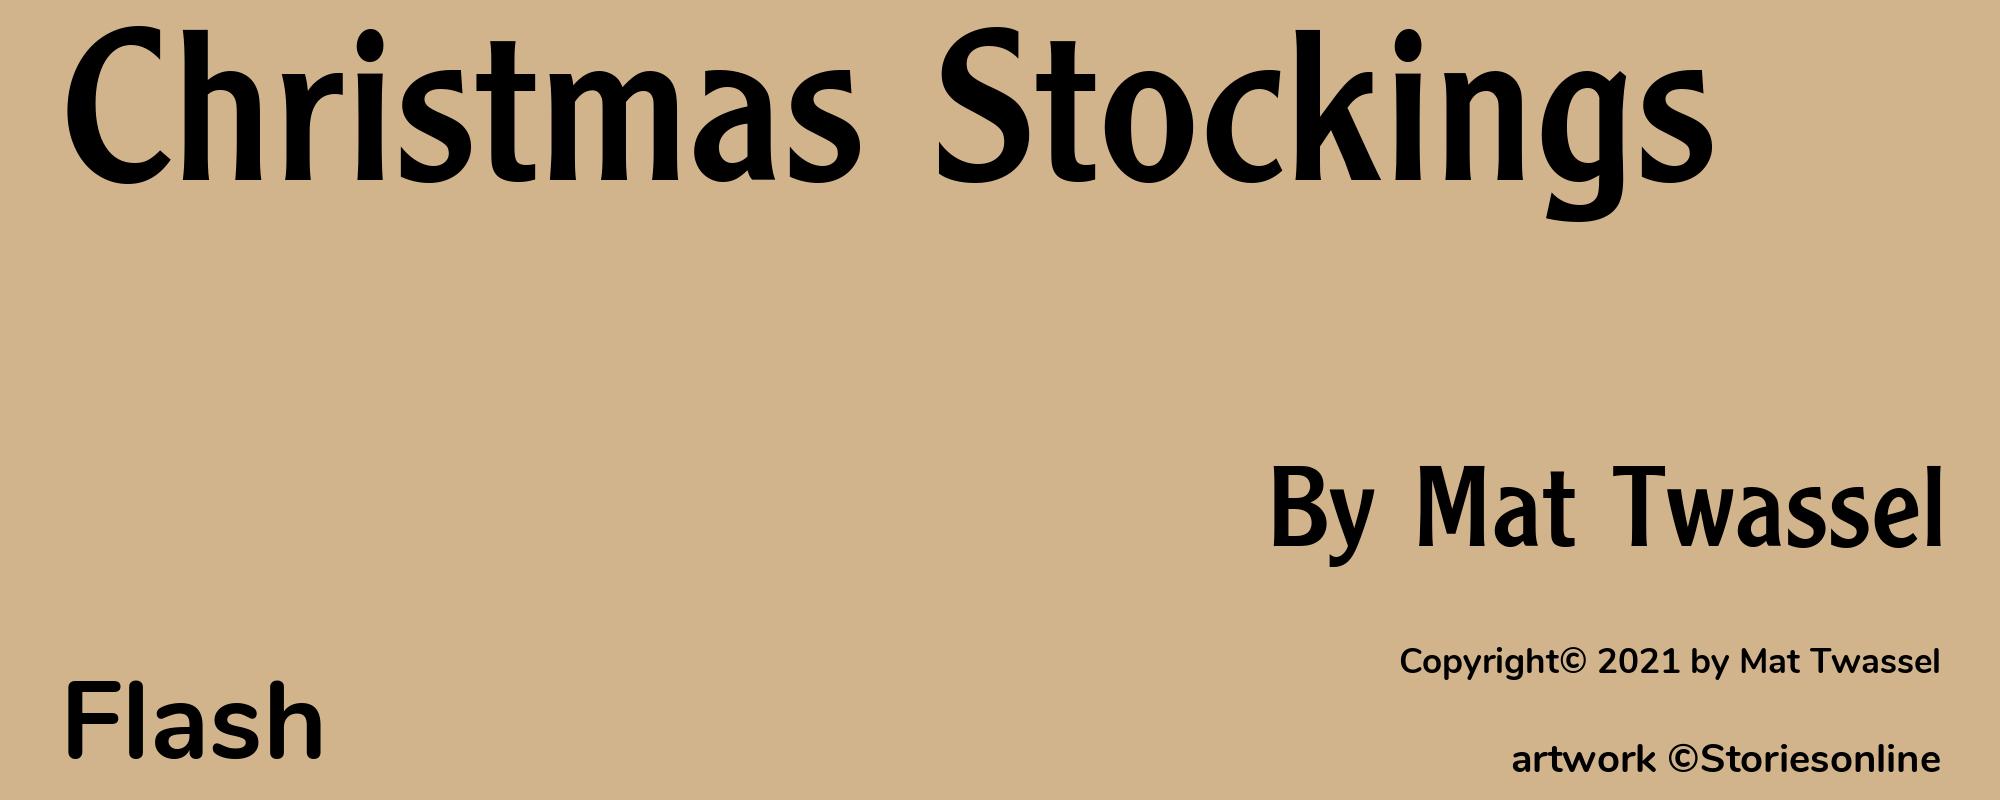 Christmas Stockings - Cover